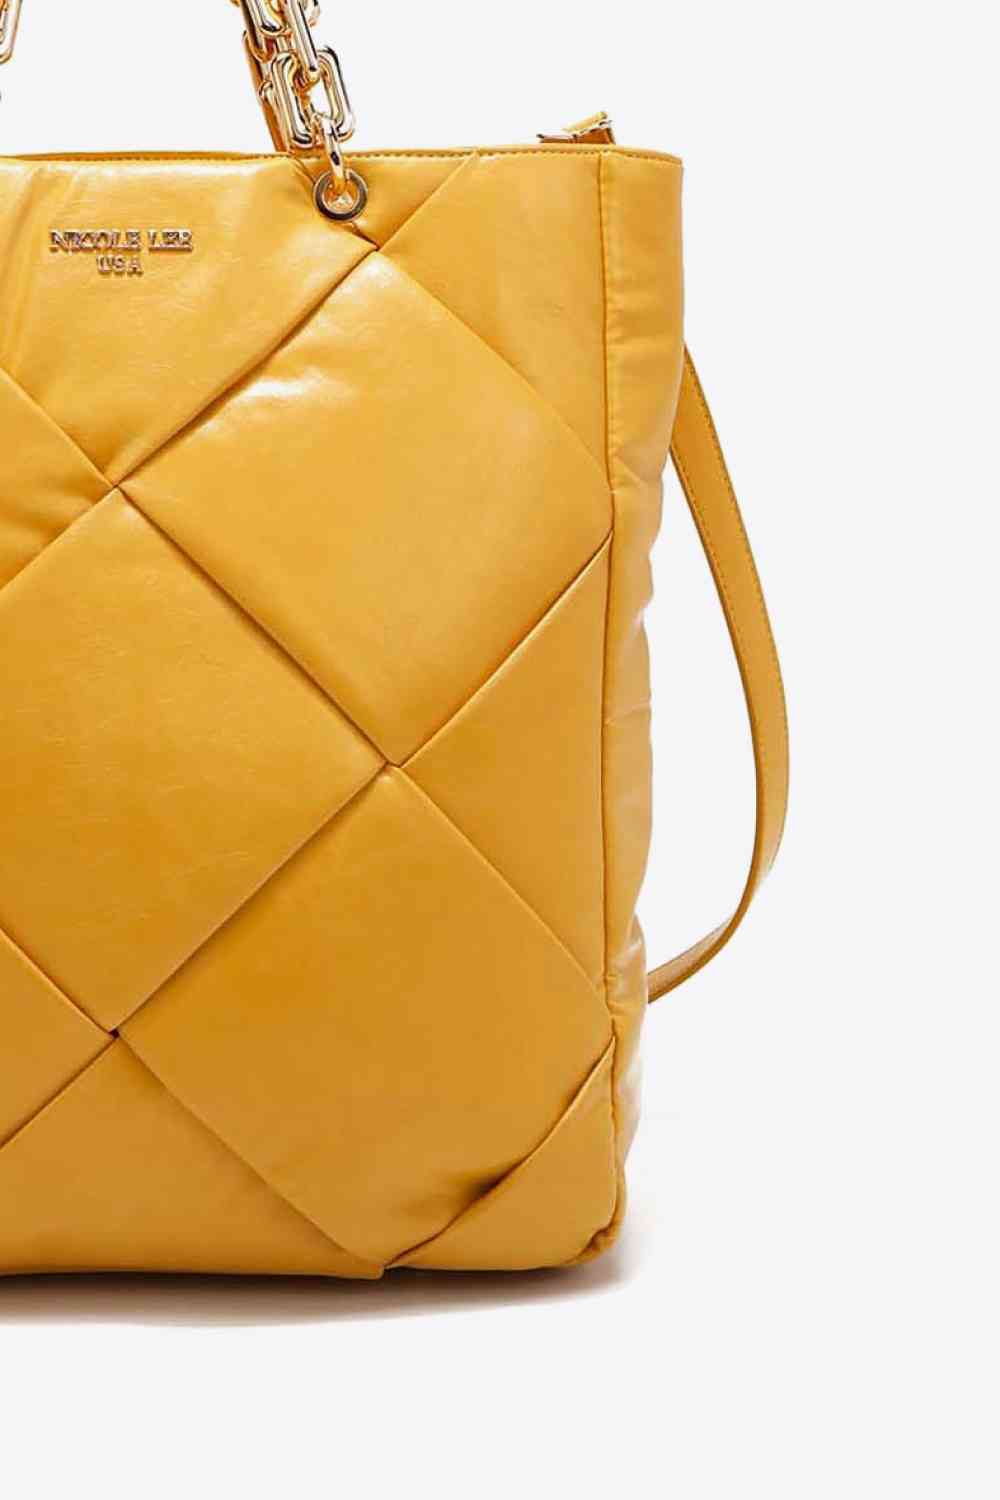 Goldenrod Nicole Lee USA Mesmerize Handbag Sentient Beauty Fashions *Accessories